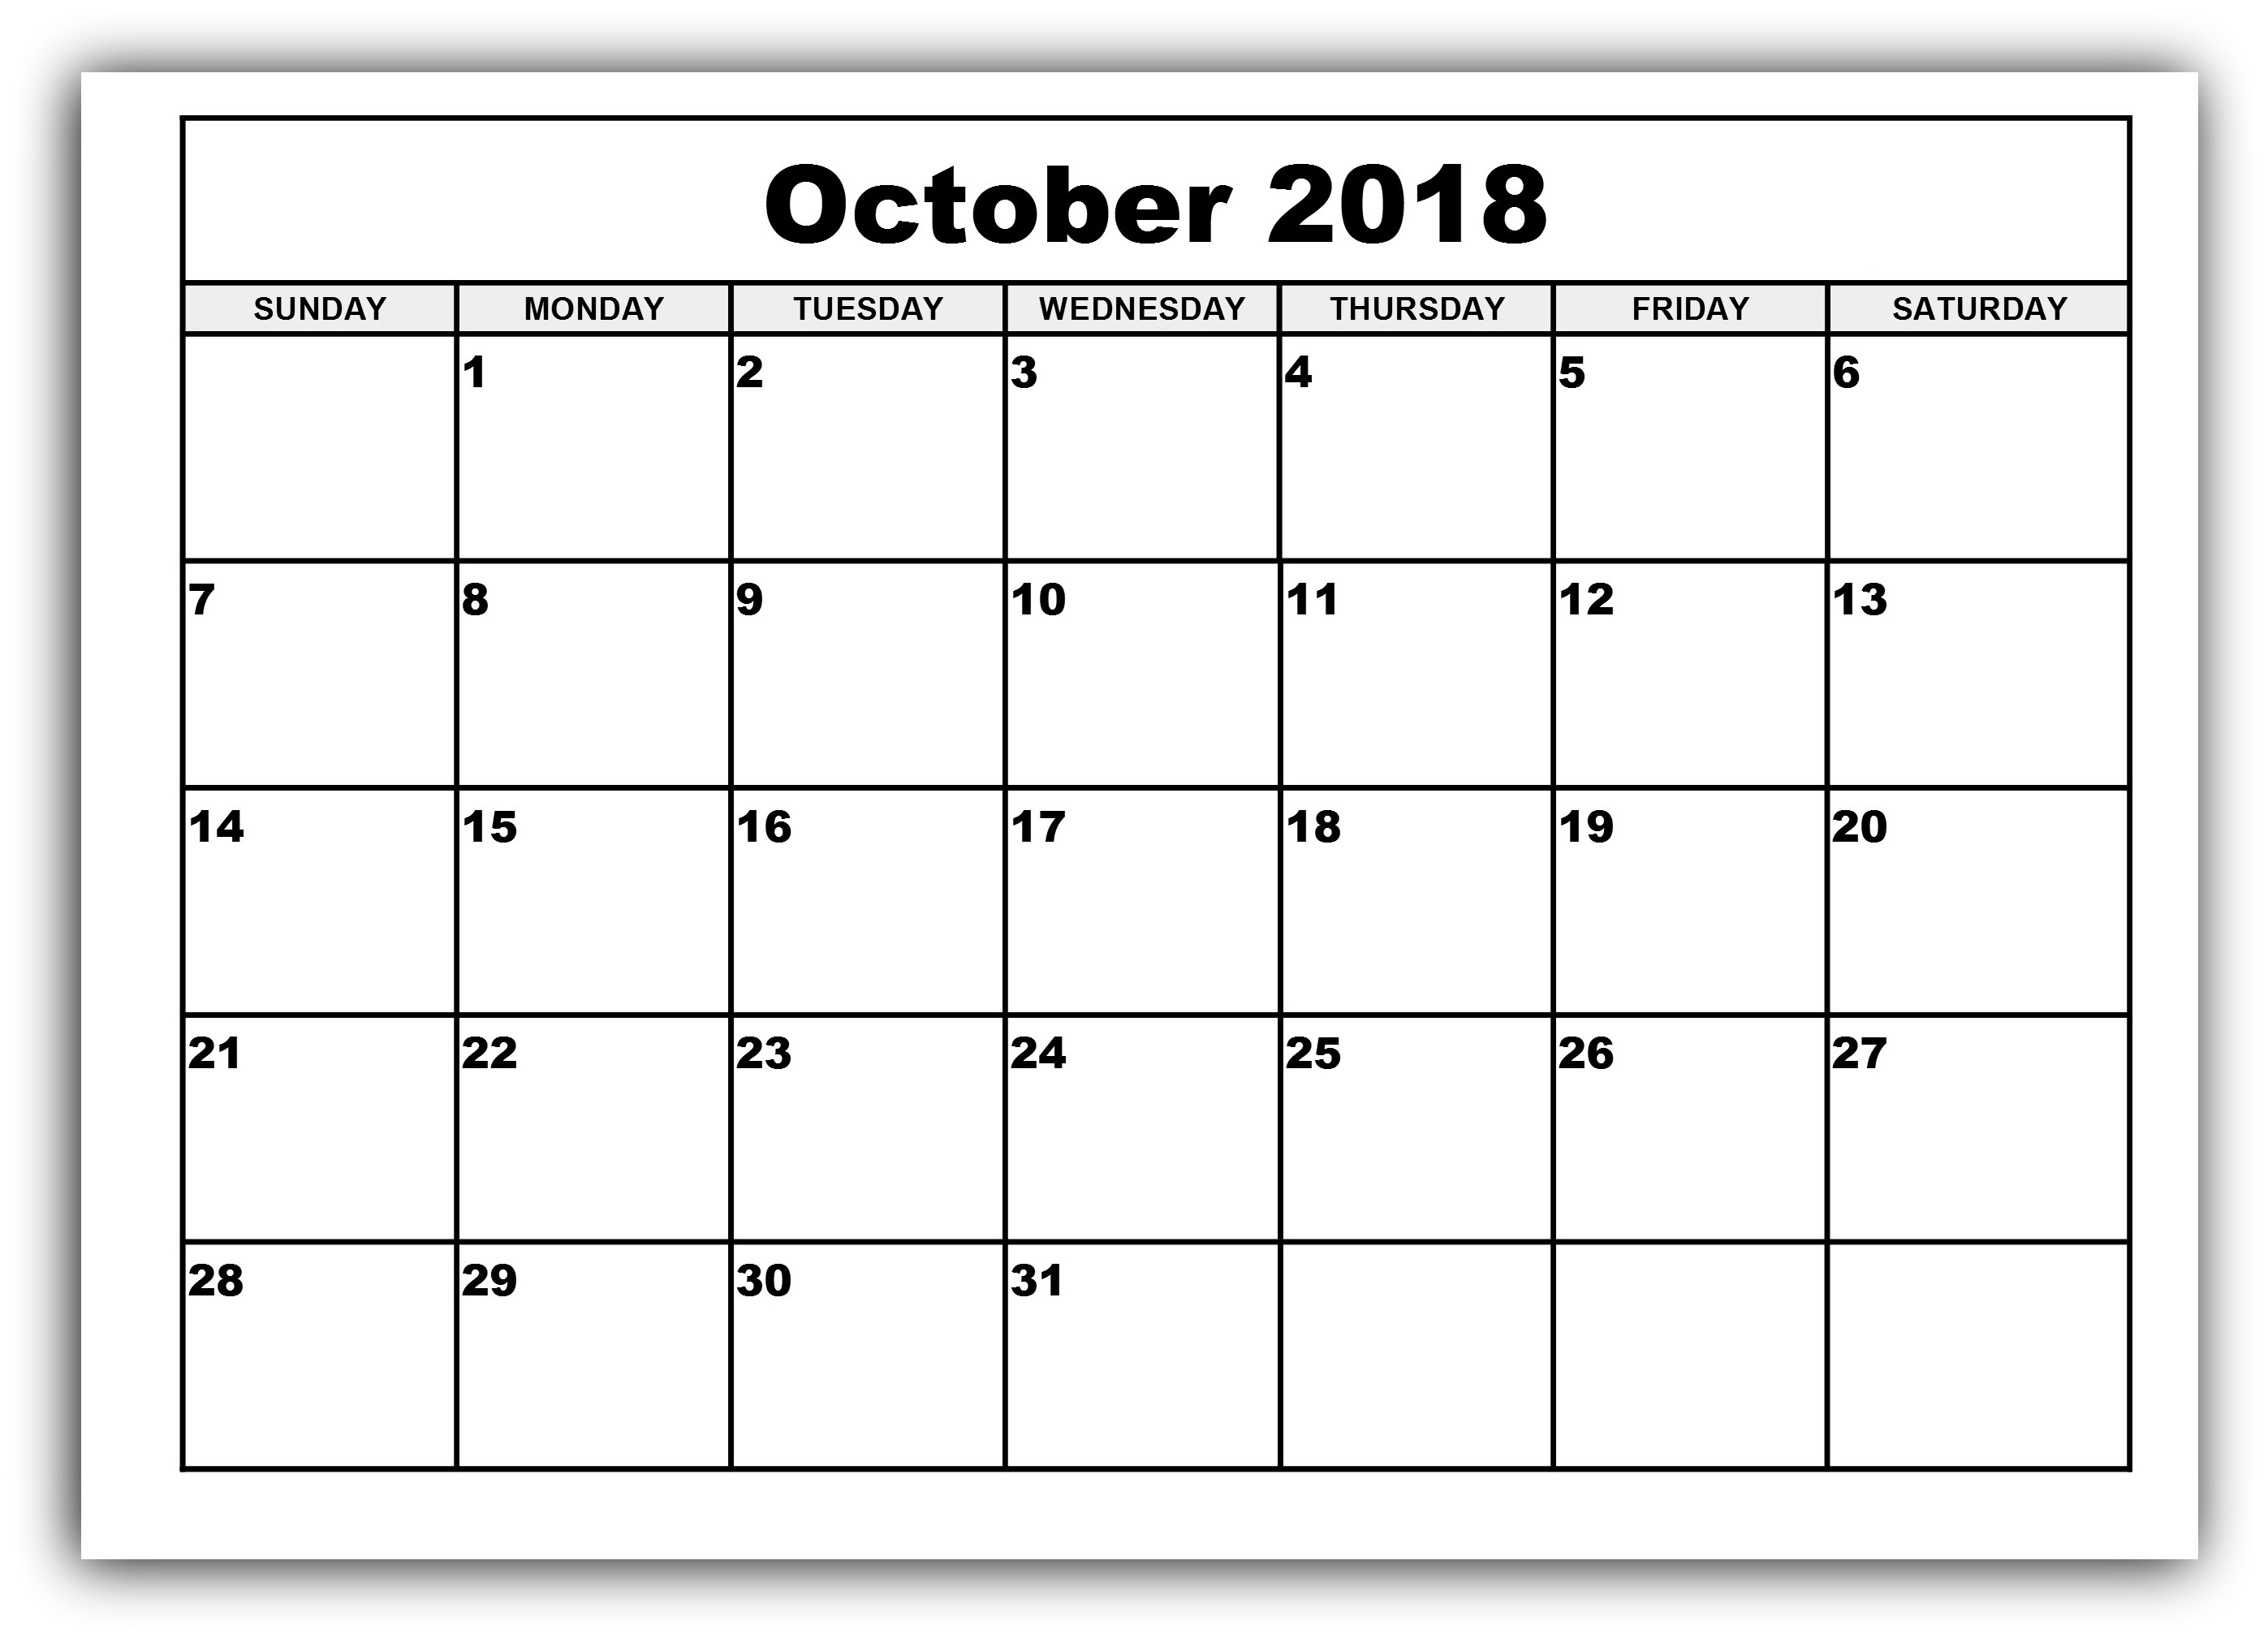 Get October 2018 Blank Printable Calendar Templates | April 2018 Calendar Template Blank Printable